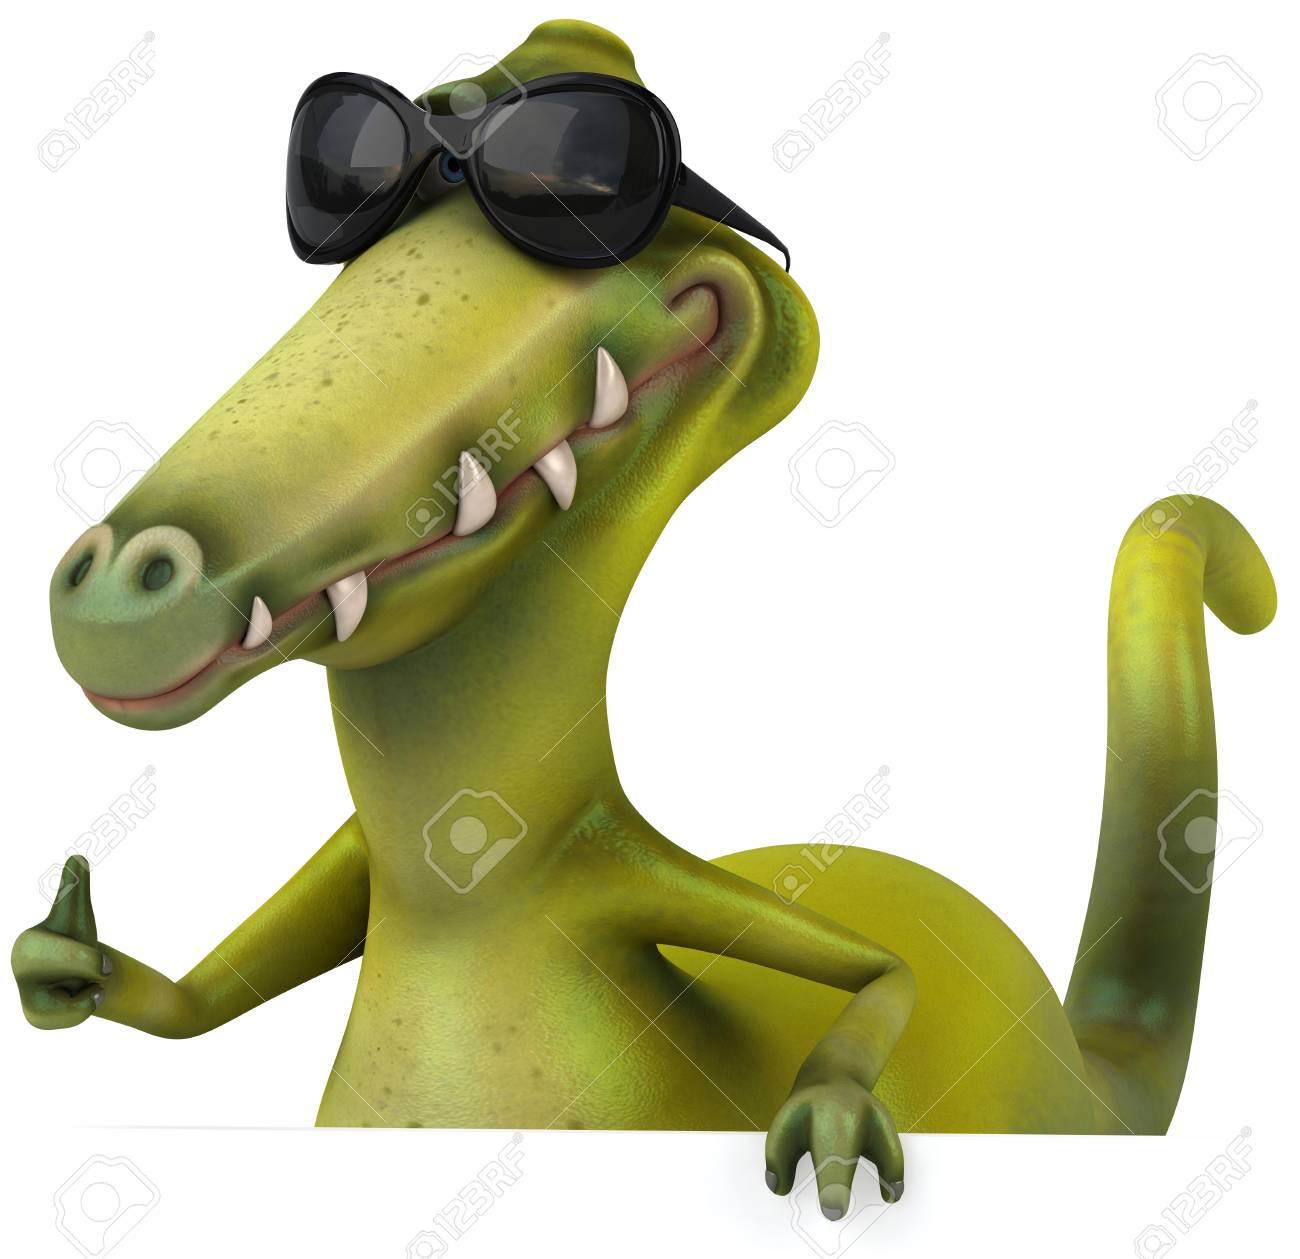 80093391-cartoon-dinosaur-with-sunglasses-pointing-up.jpg